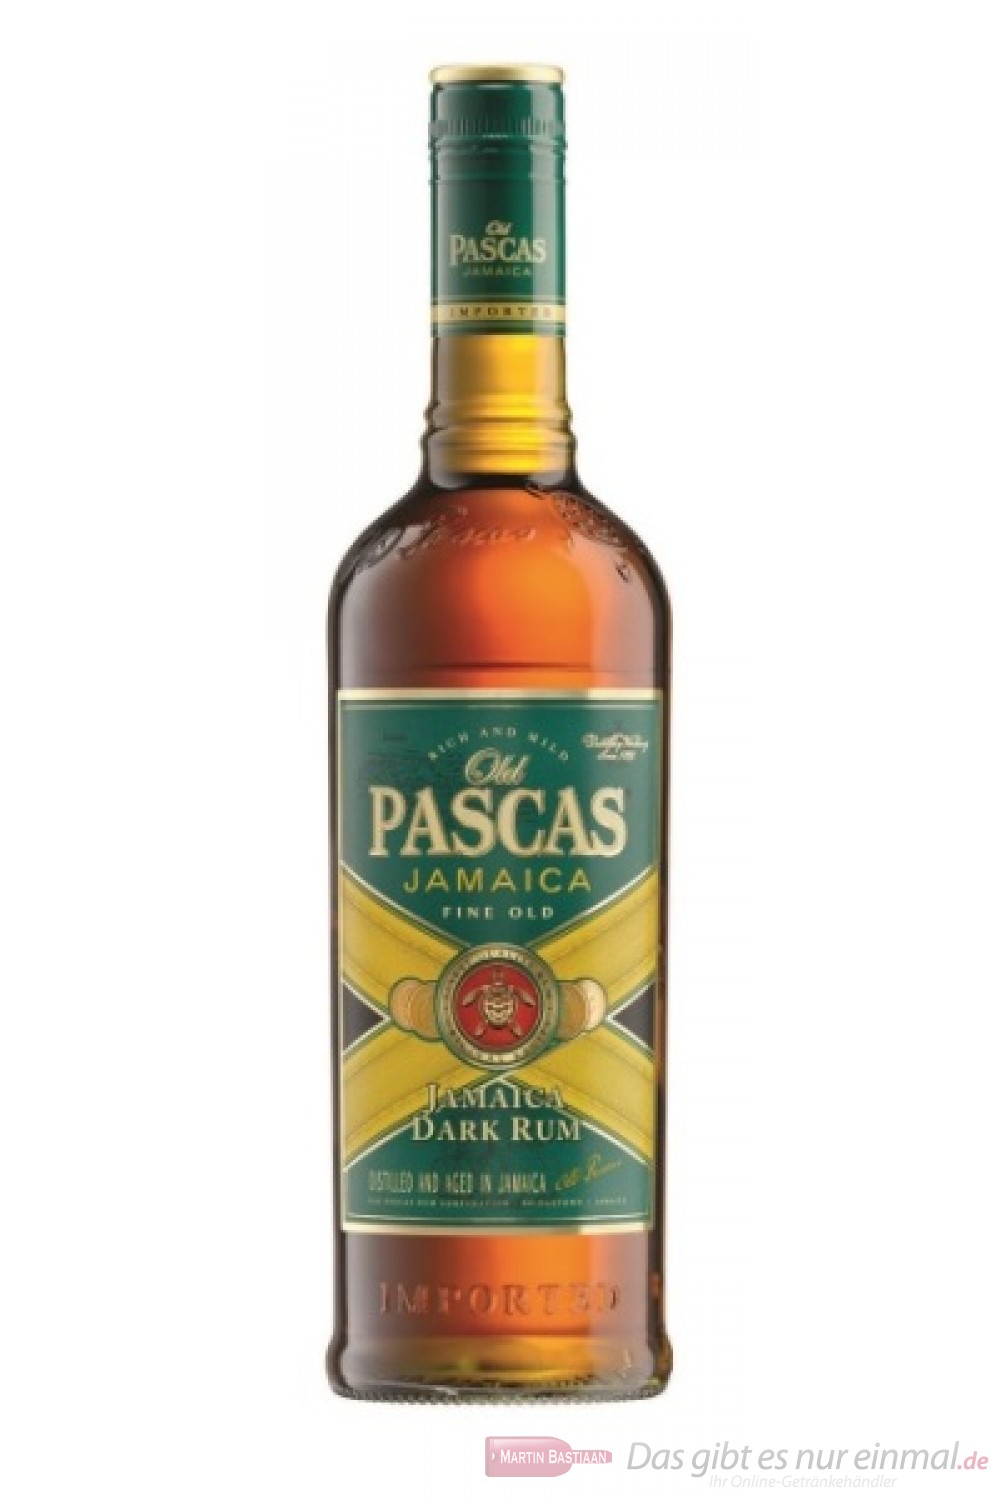 Old Pascas Jamaica